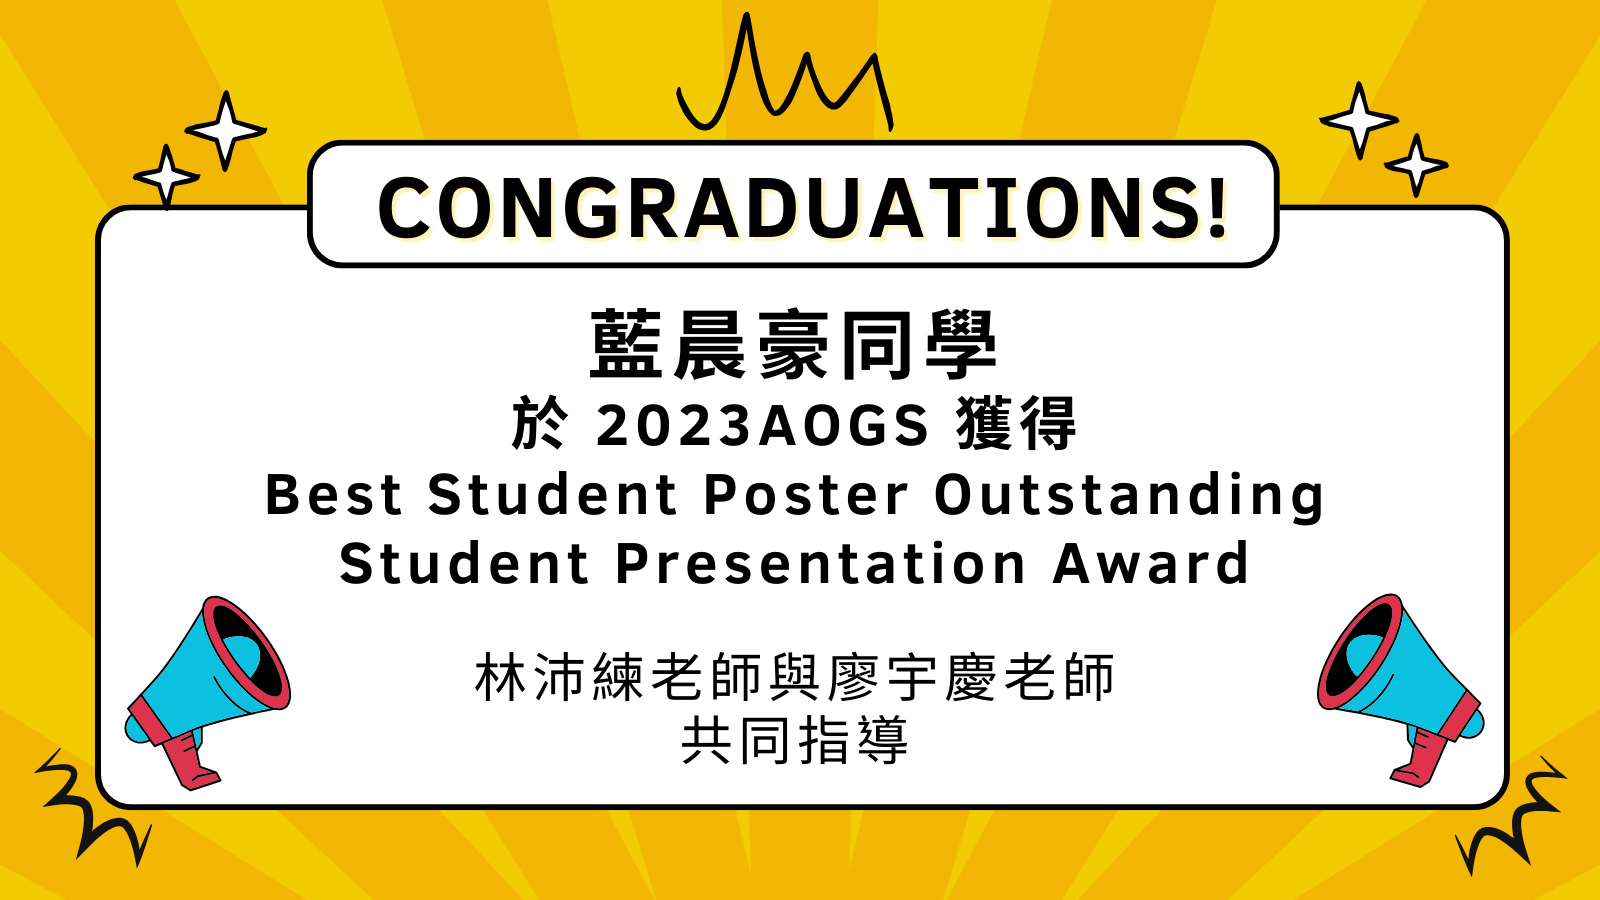 【得獎】博士班學生藍晨豪同學於2023 AOGS榮獲Best Student Poster Outstanding Student Presentation Award